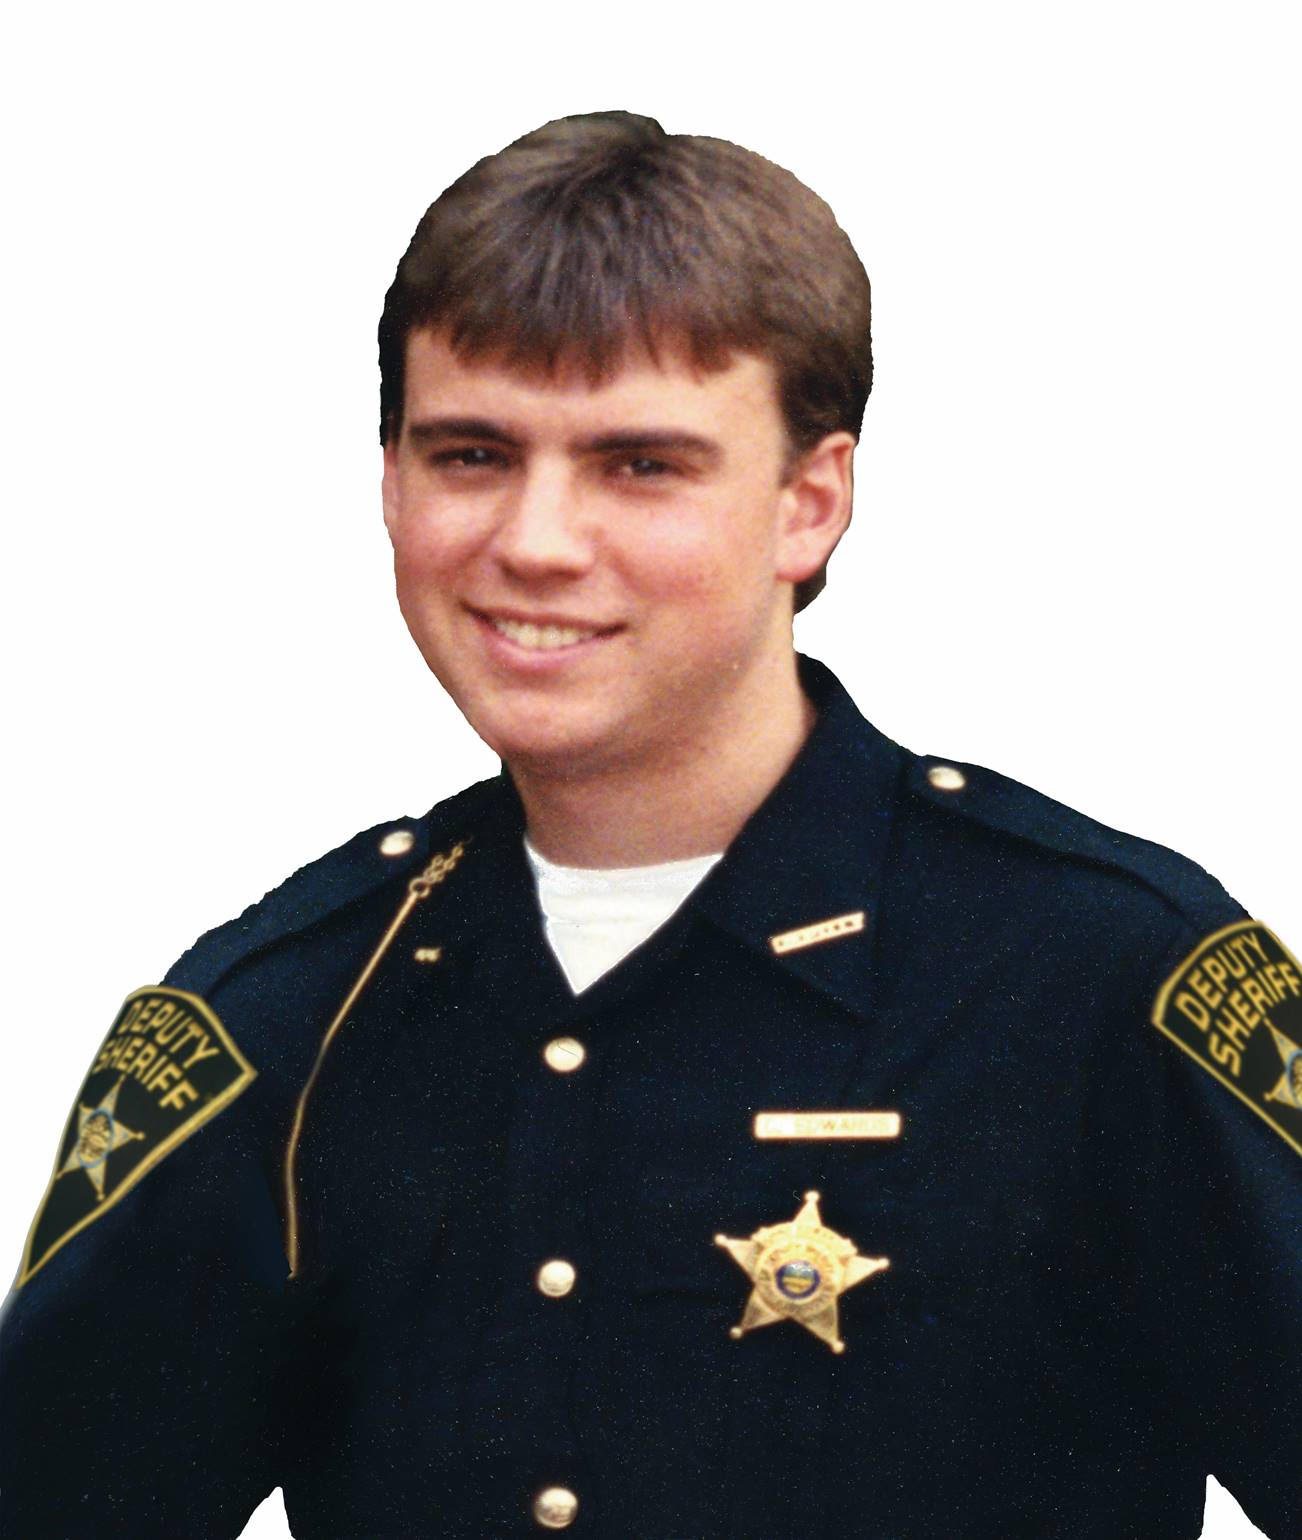 Deputy Sheriff Chad Steven Edwards | Fairfield County Sheriff's Office, Ohio